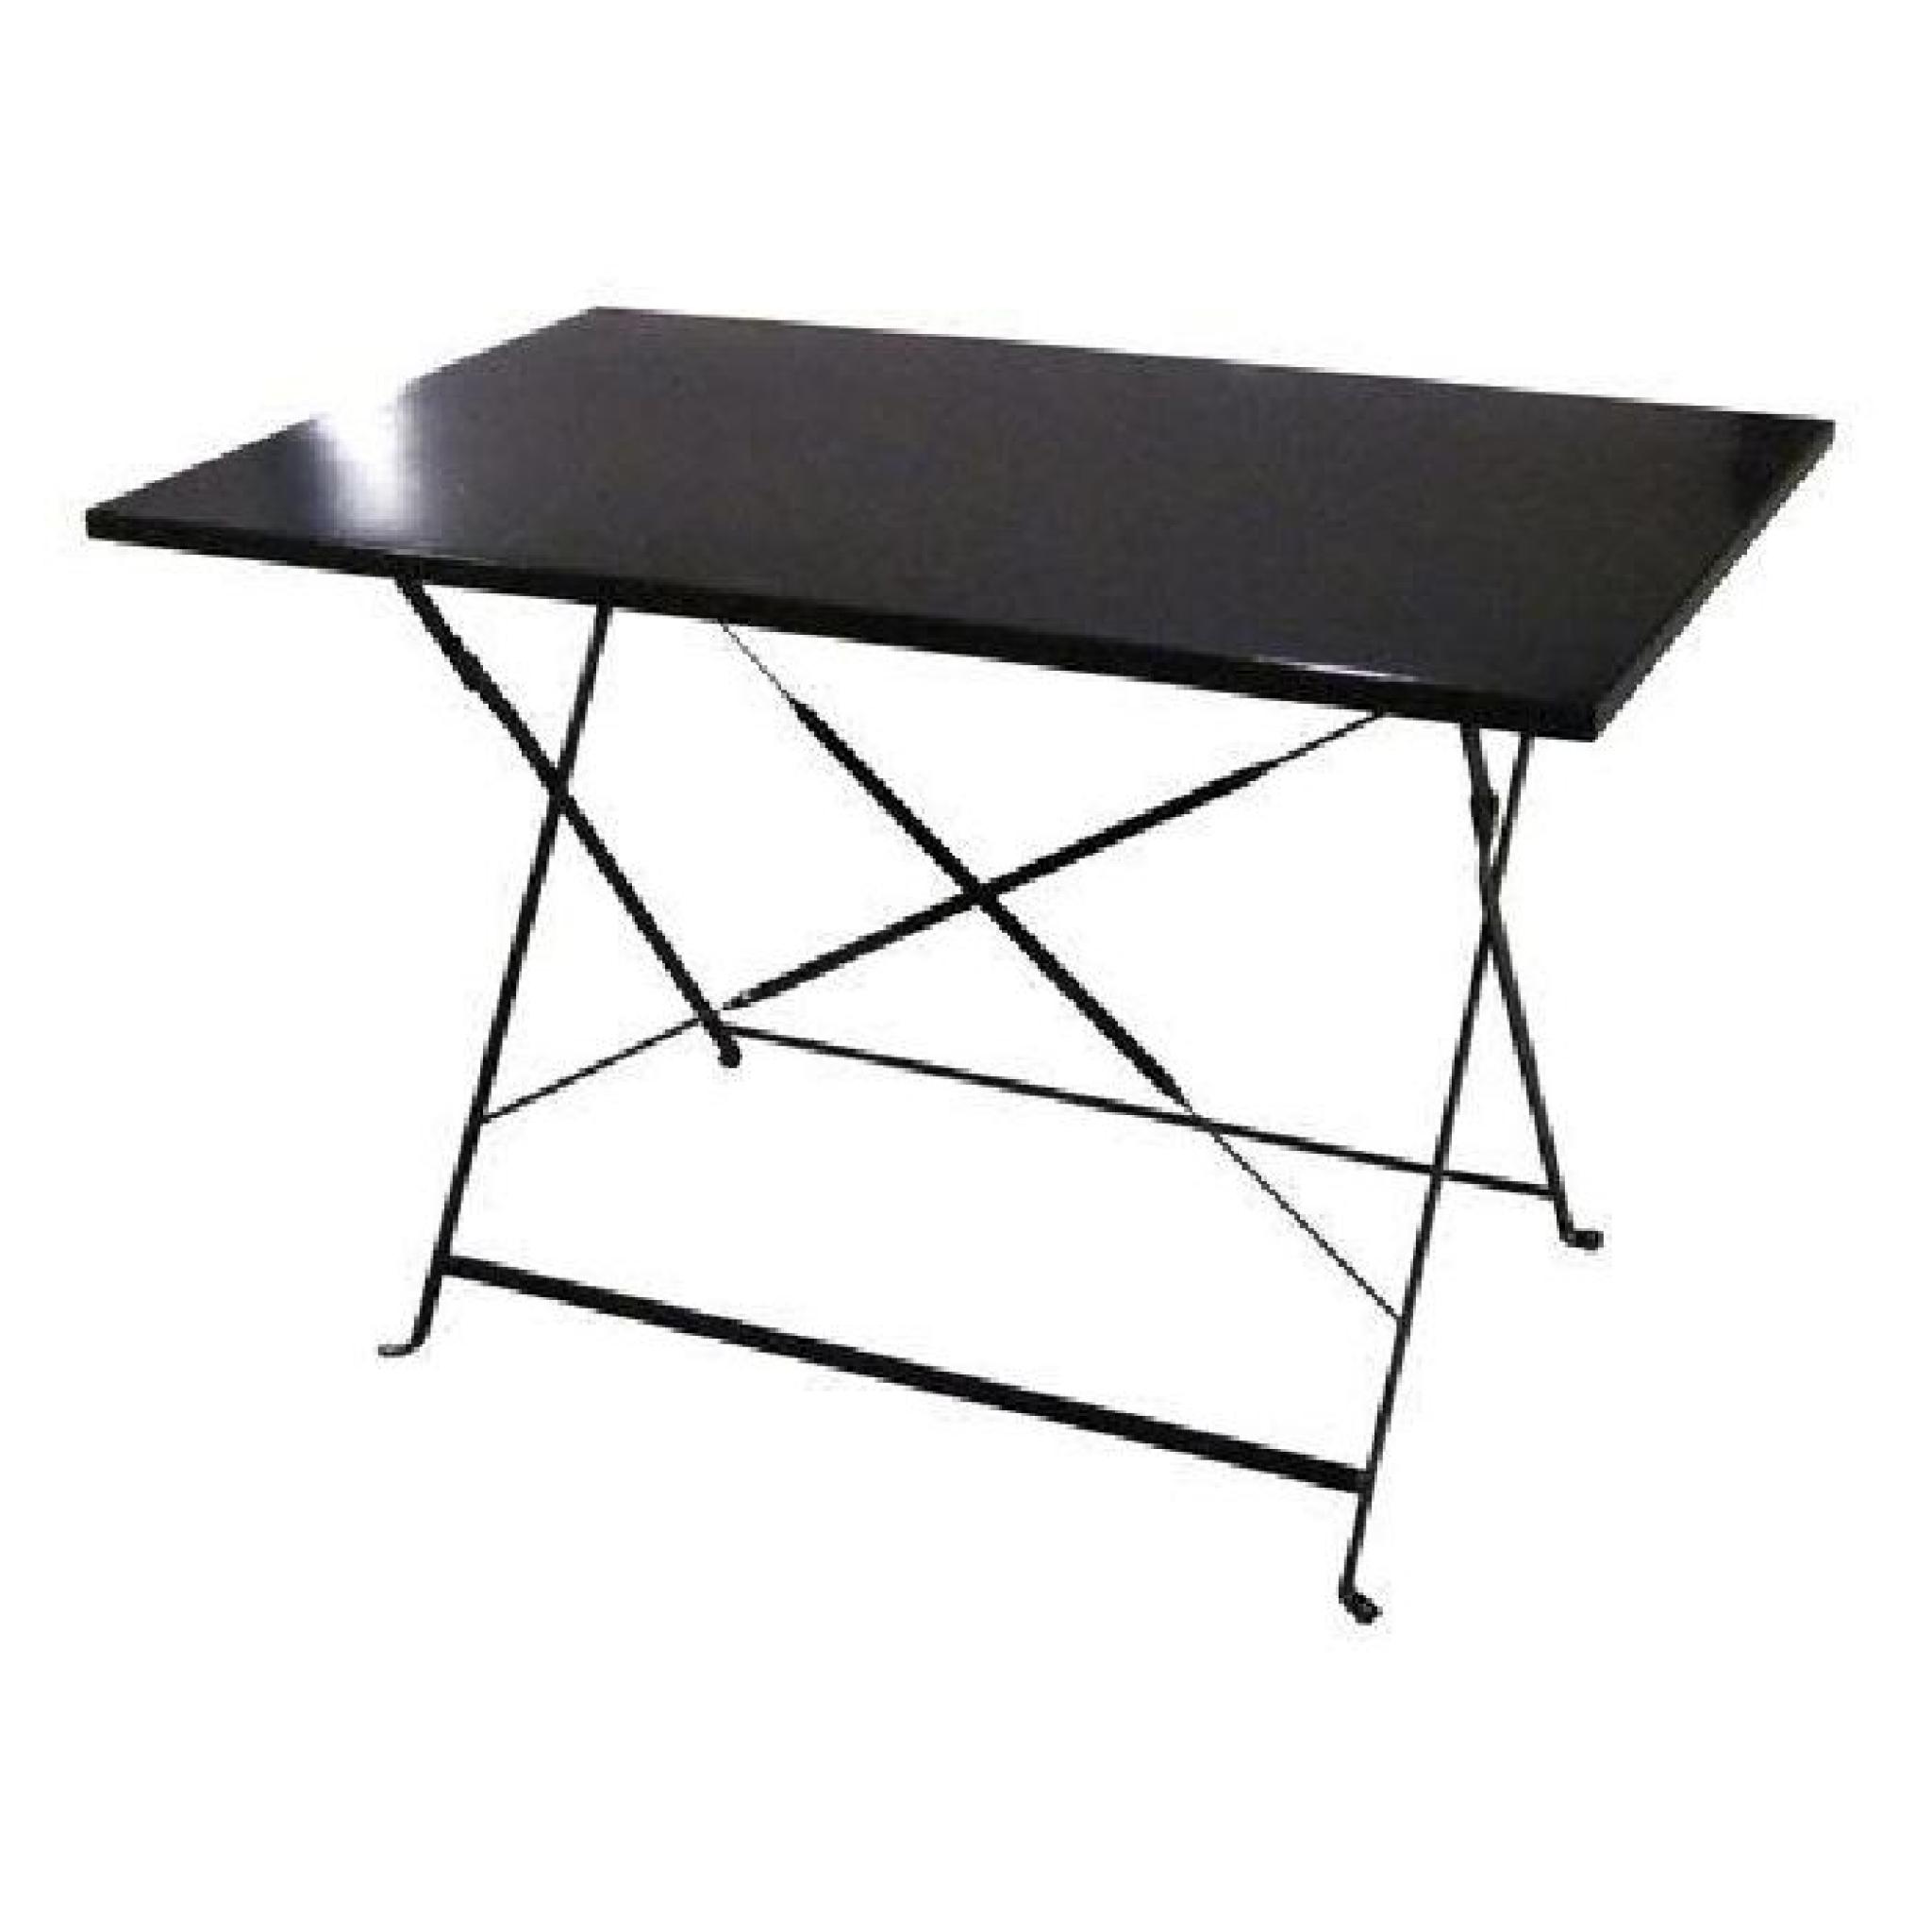 Table de jardin pliante Camarque - 70x70 cm - Noir